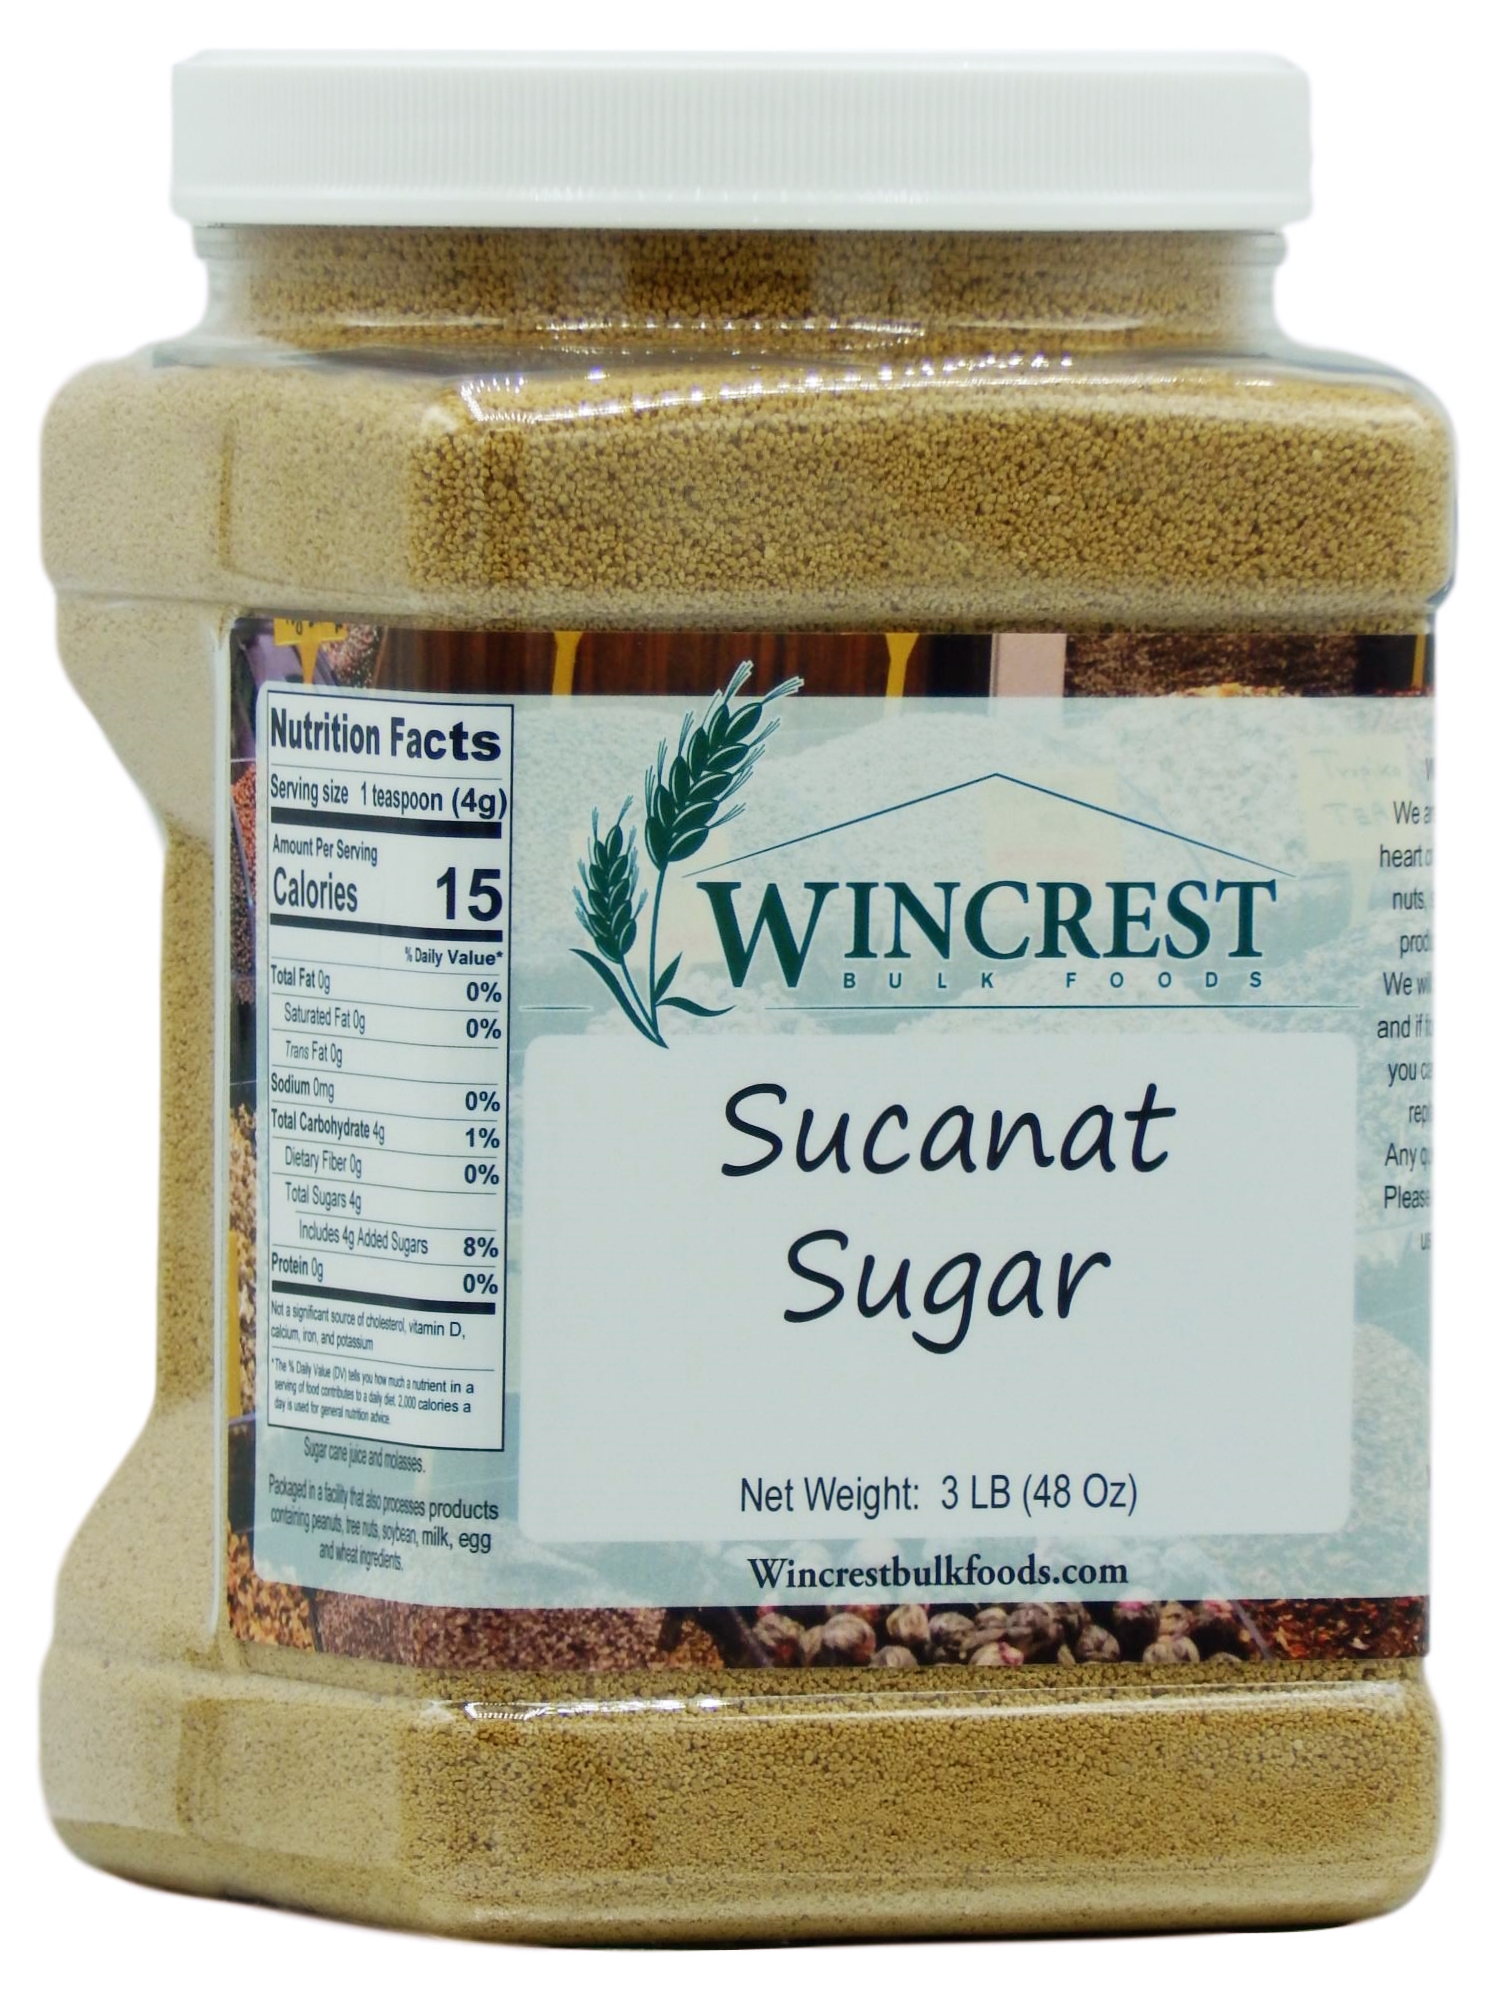 WinCrest Sucanat Sugar - 3 Lb Tub - image 1 of 3